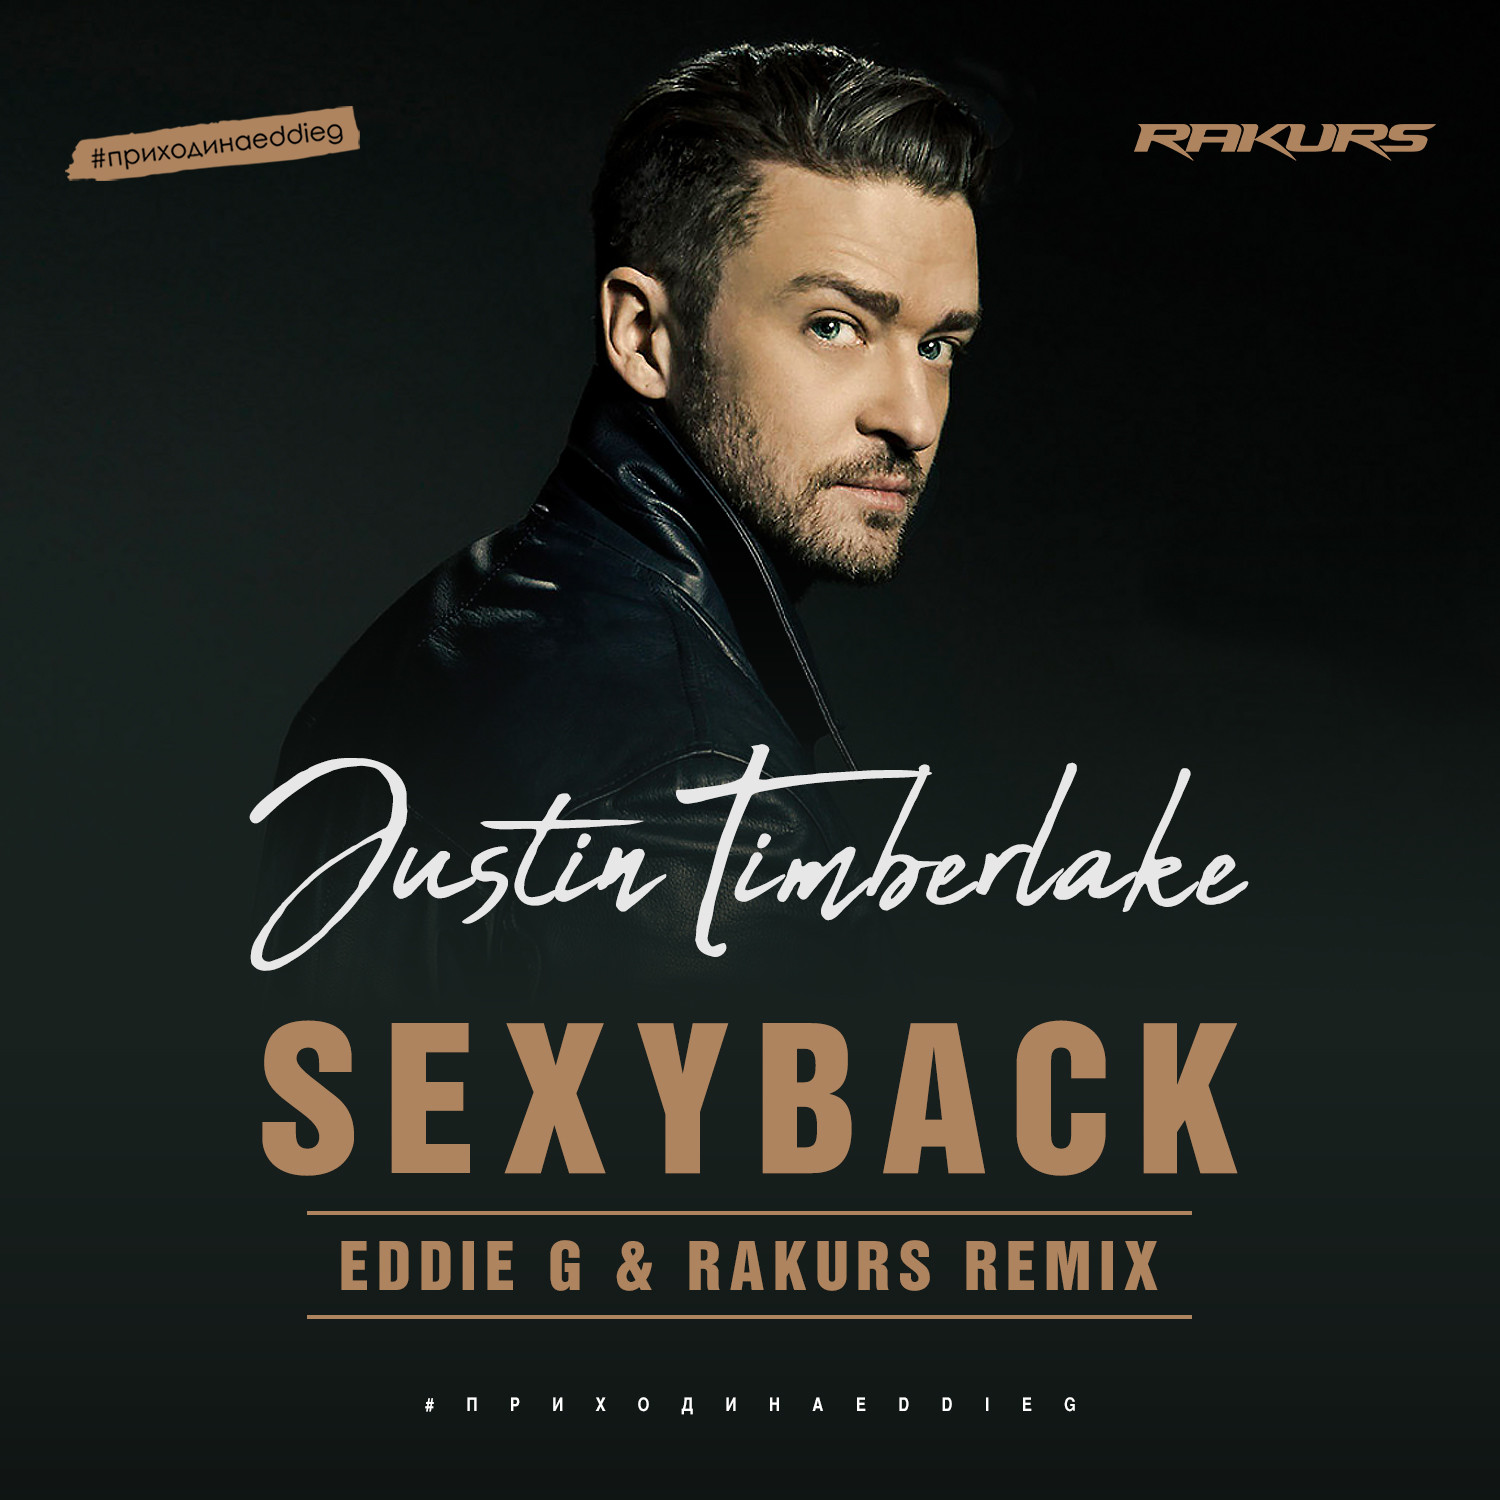 Песня sexy back. SEXYBACK Джастин Тимберлейк. SEXYBACK Justin Timberlake обложка. Justin Timberlake Timbaland. Justin Timberlake, Timbaland - SEXYBACK.